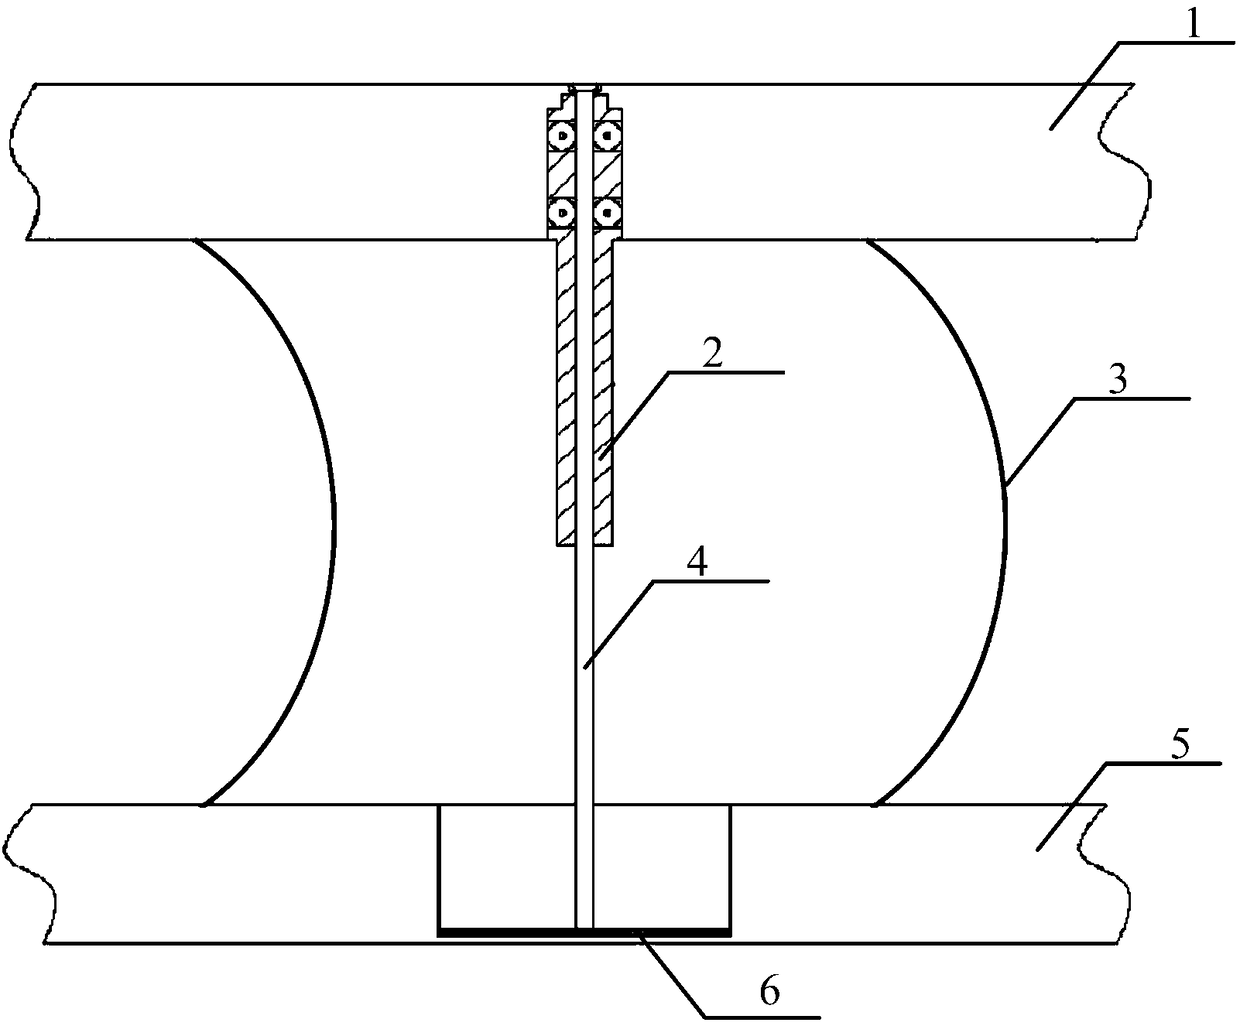 PECVD (Plasma Enhanced Vapor Deposition) reaction chamber and support pin for PECVD reaction chamber